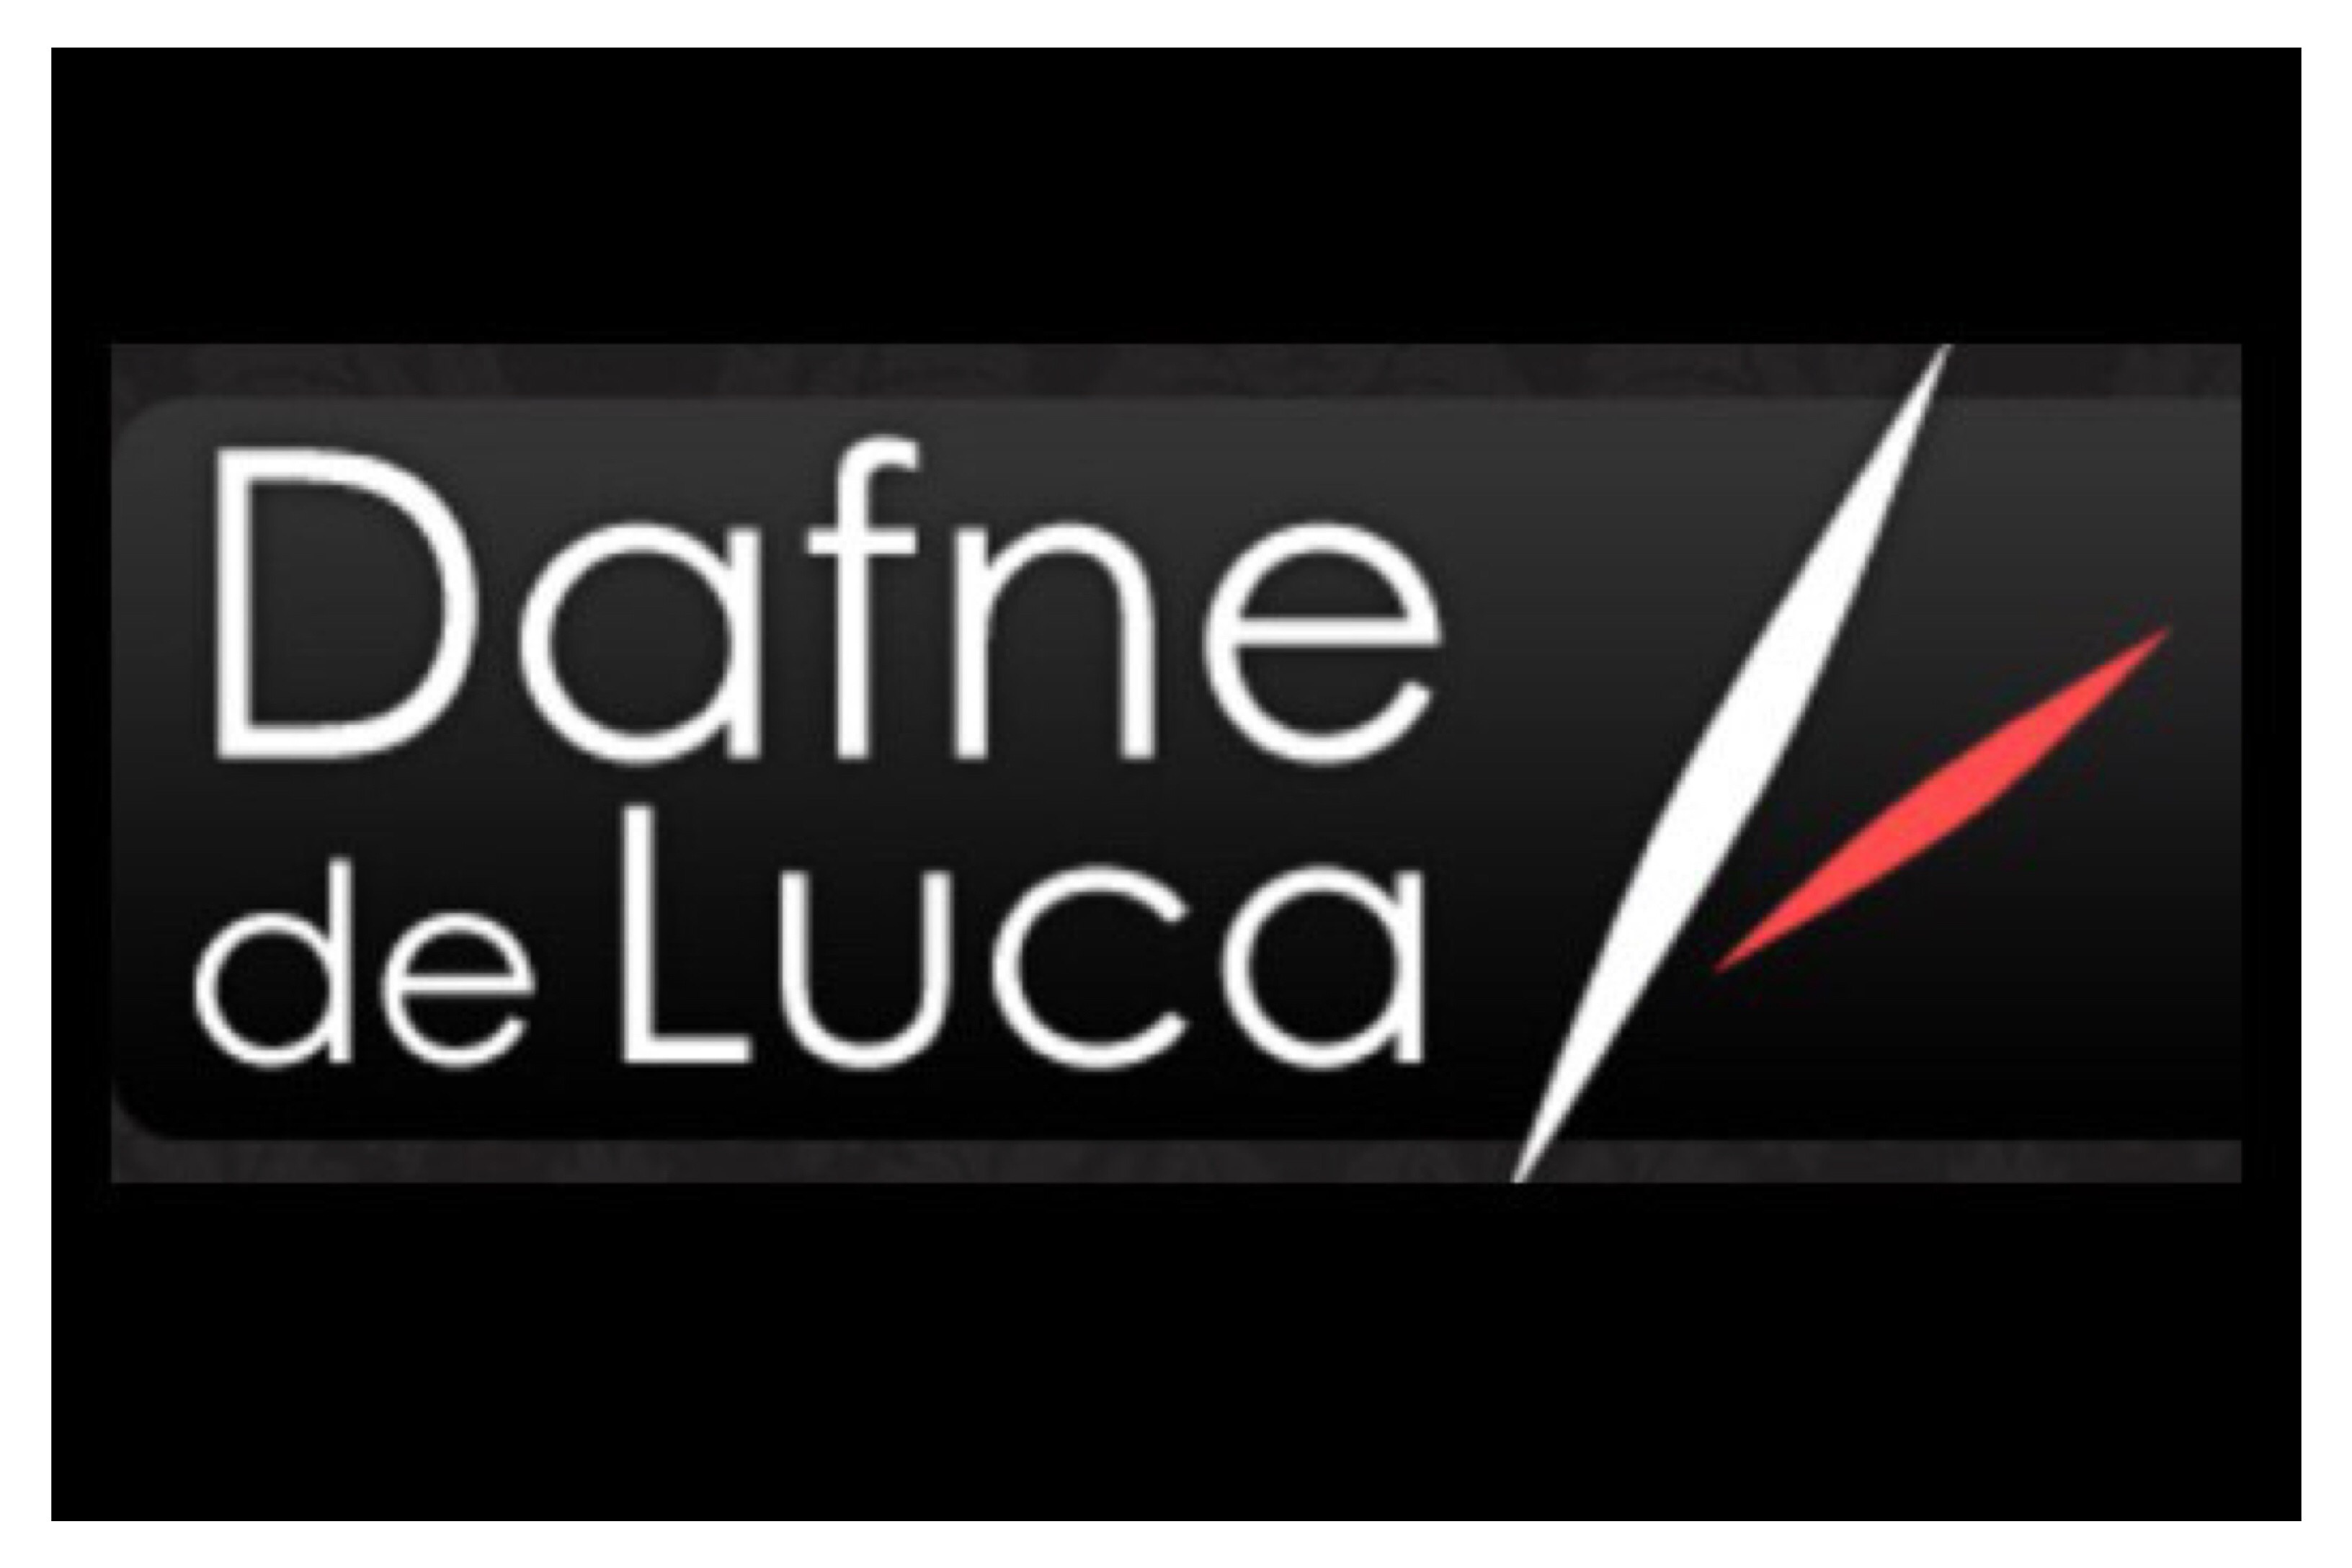 Dafne de Luca